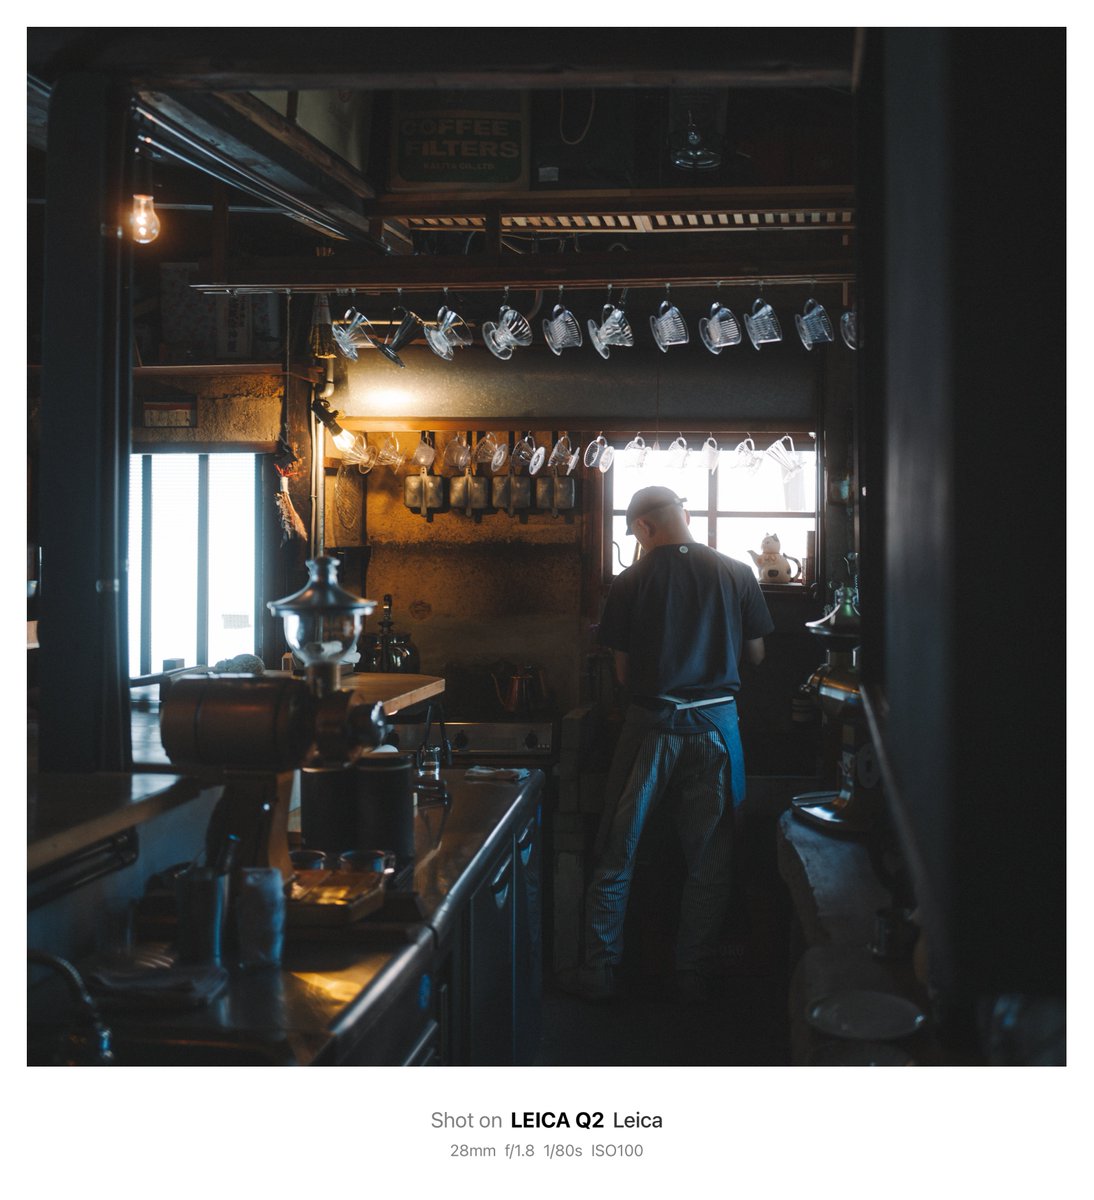 just a record

京都で好きな珈琲屋の二条小屋

近くに行った方は是非。

LeicaQ2